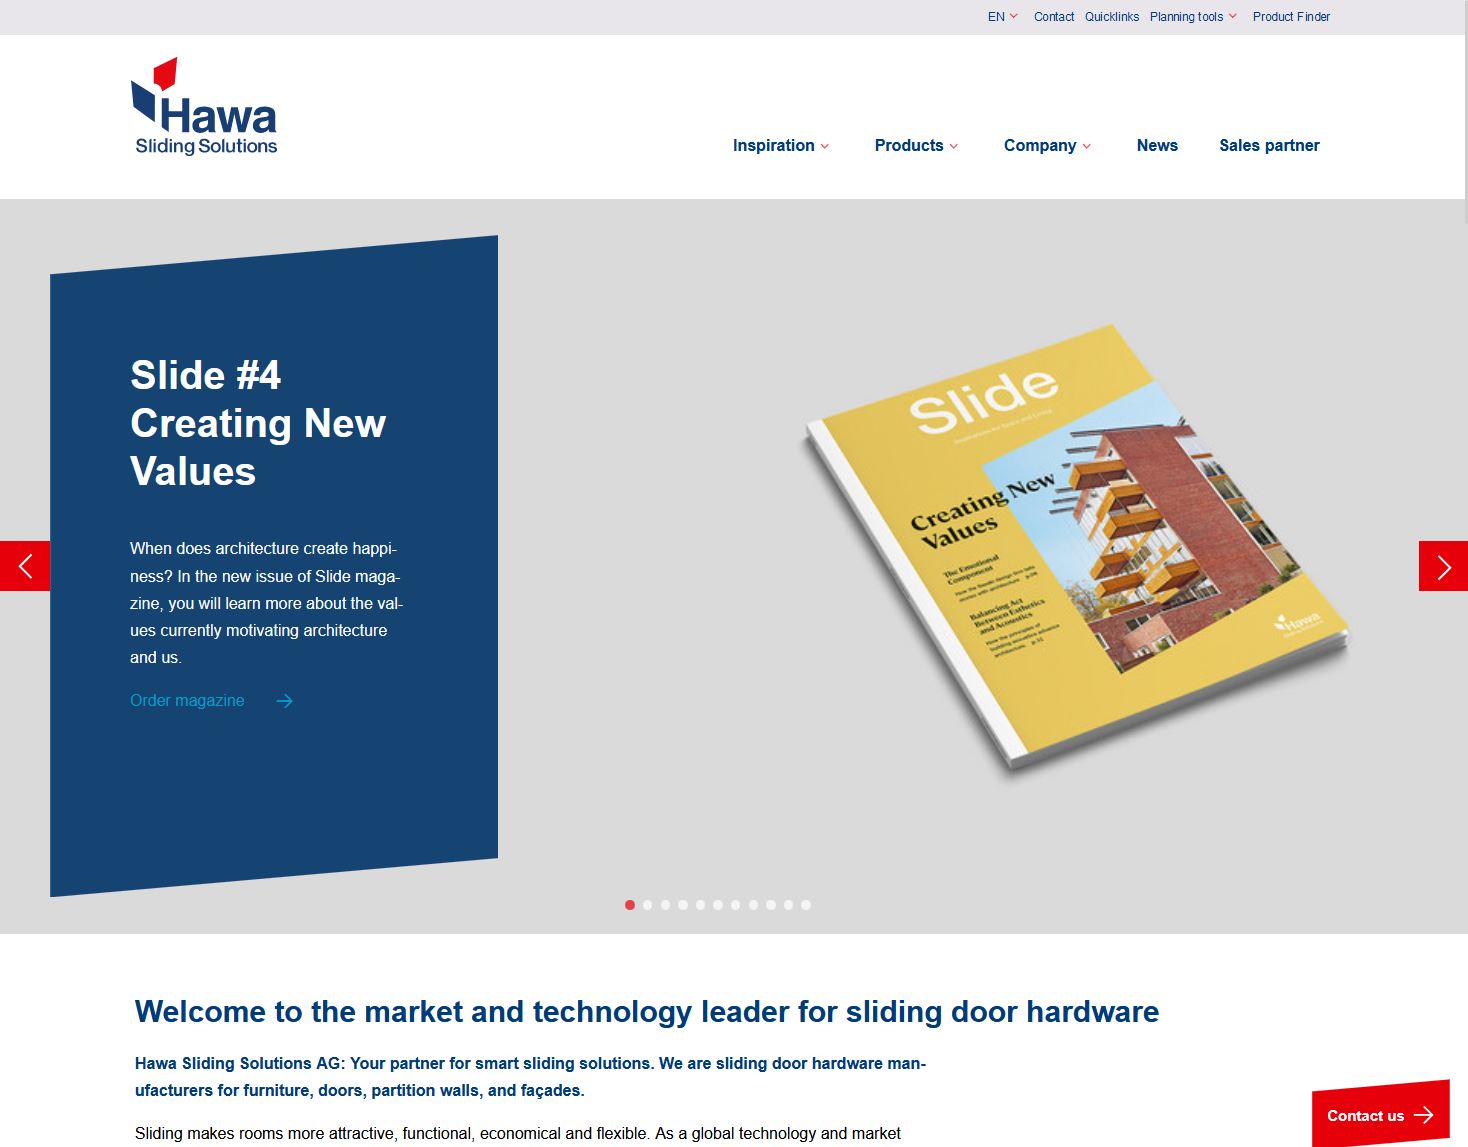 Hawa Sliding Solutions - Hawa.com Website